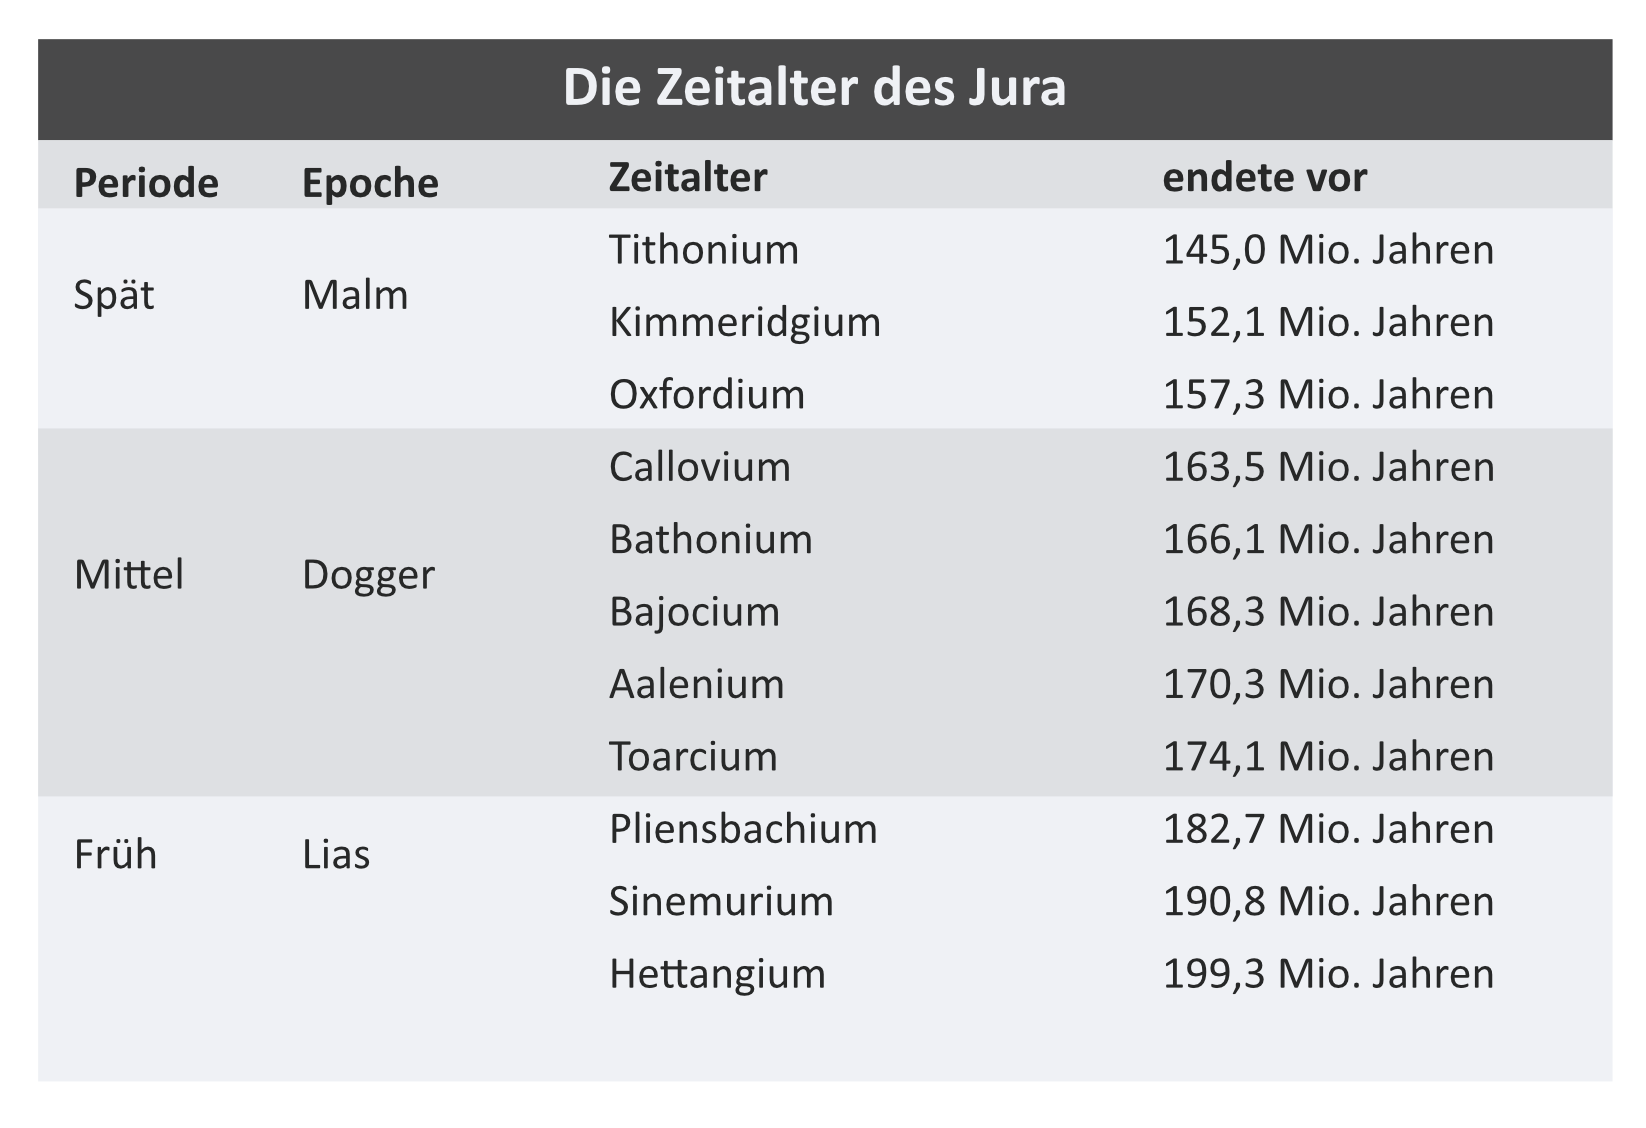 Zeitalter des Jura / Dinodata.de. Creative Commons 4.0 International (CC BY 4.0)